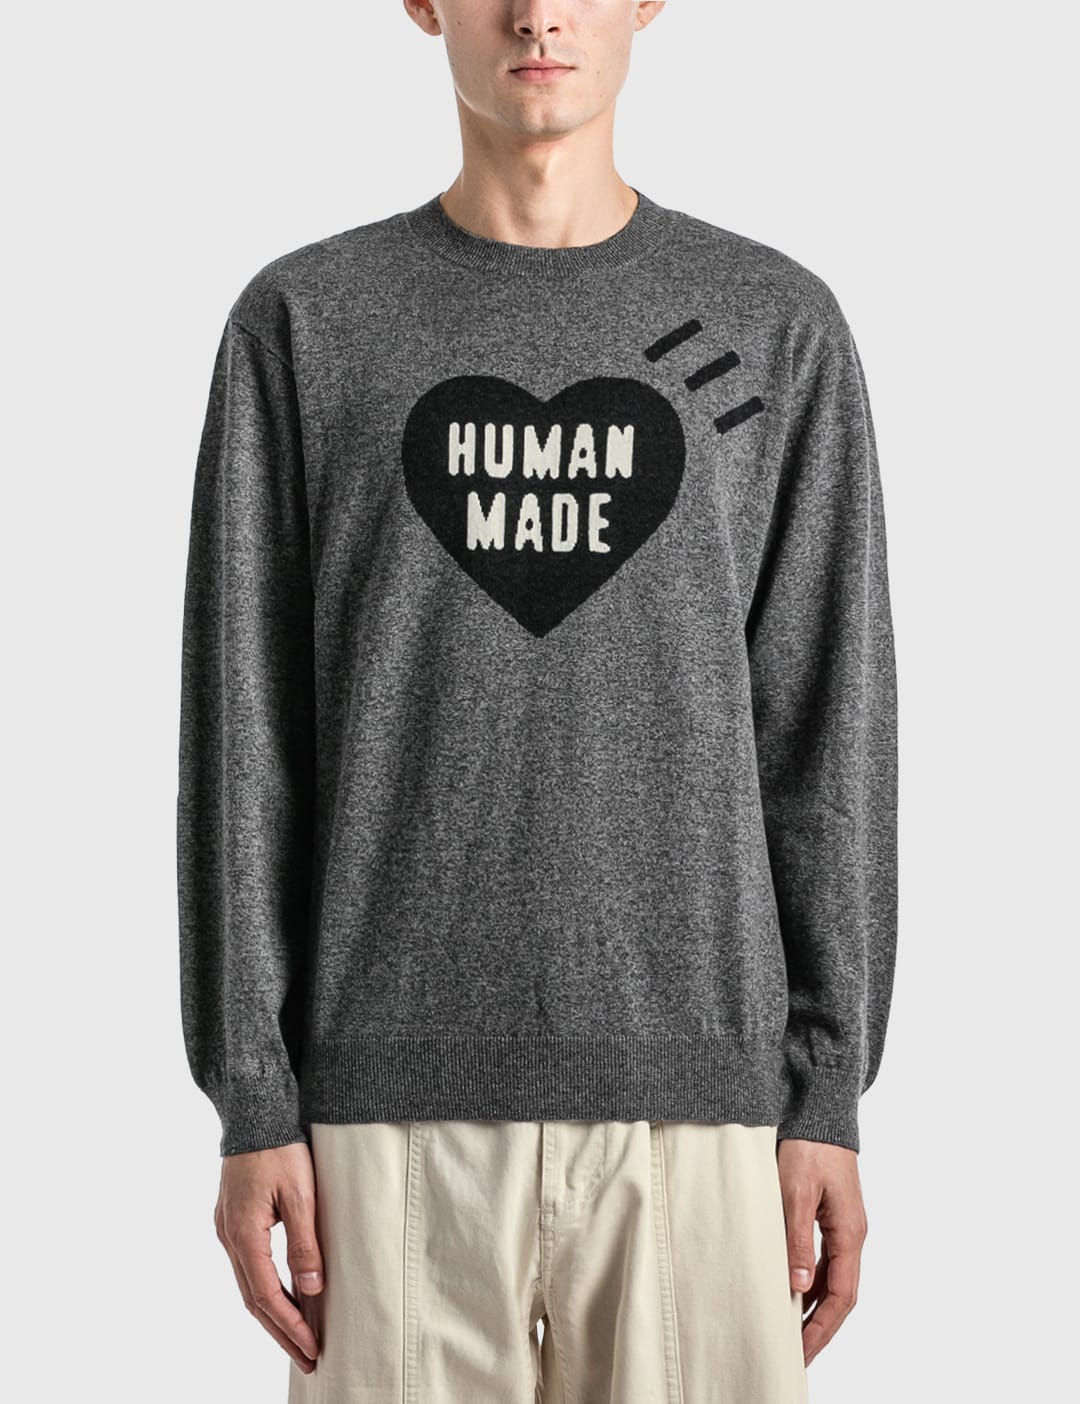 Human Made - Heart Knit Sweater | HBX - HYPEBEAST 為您搜羅全球潮流